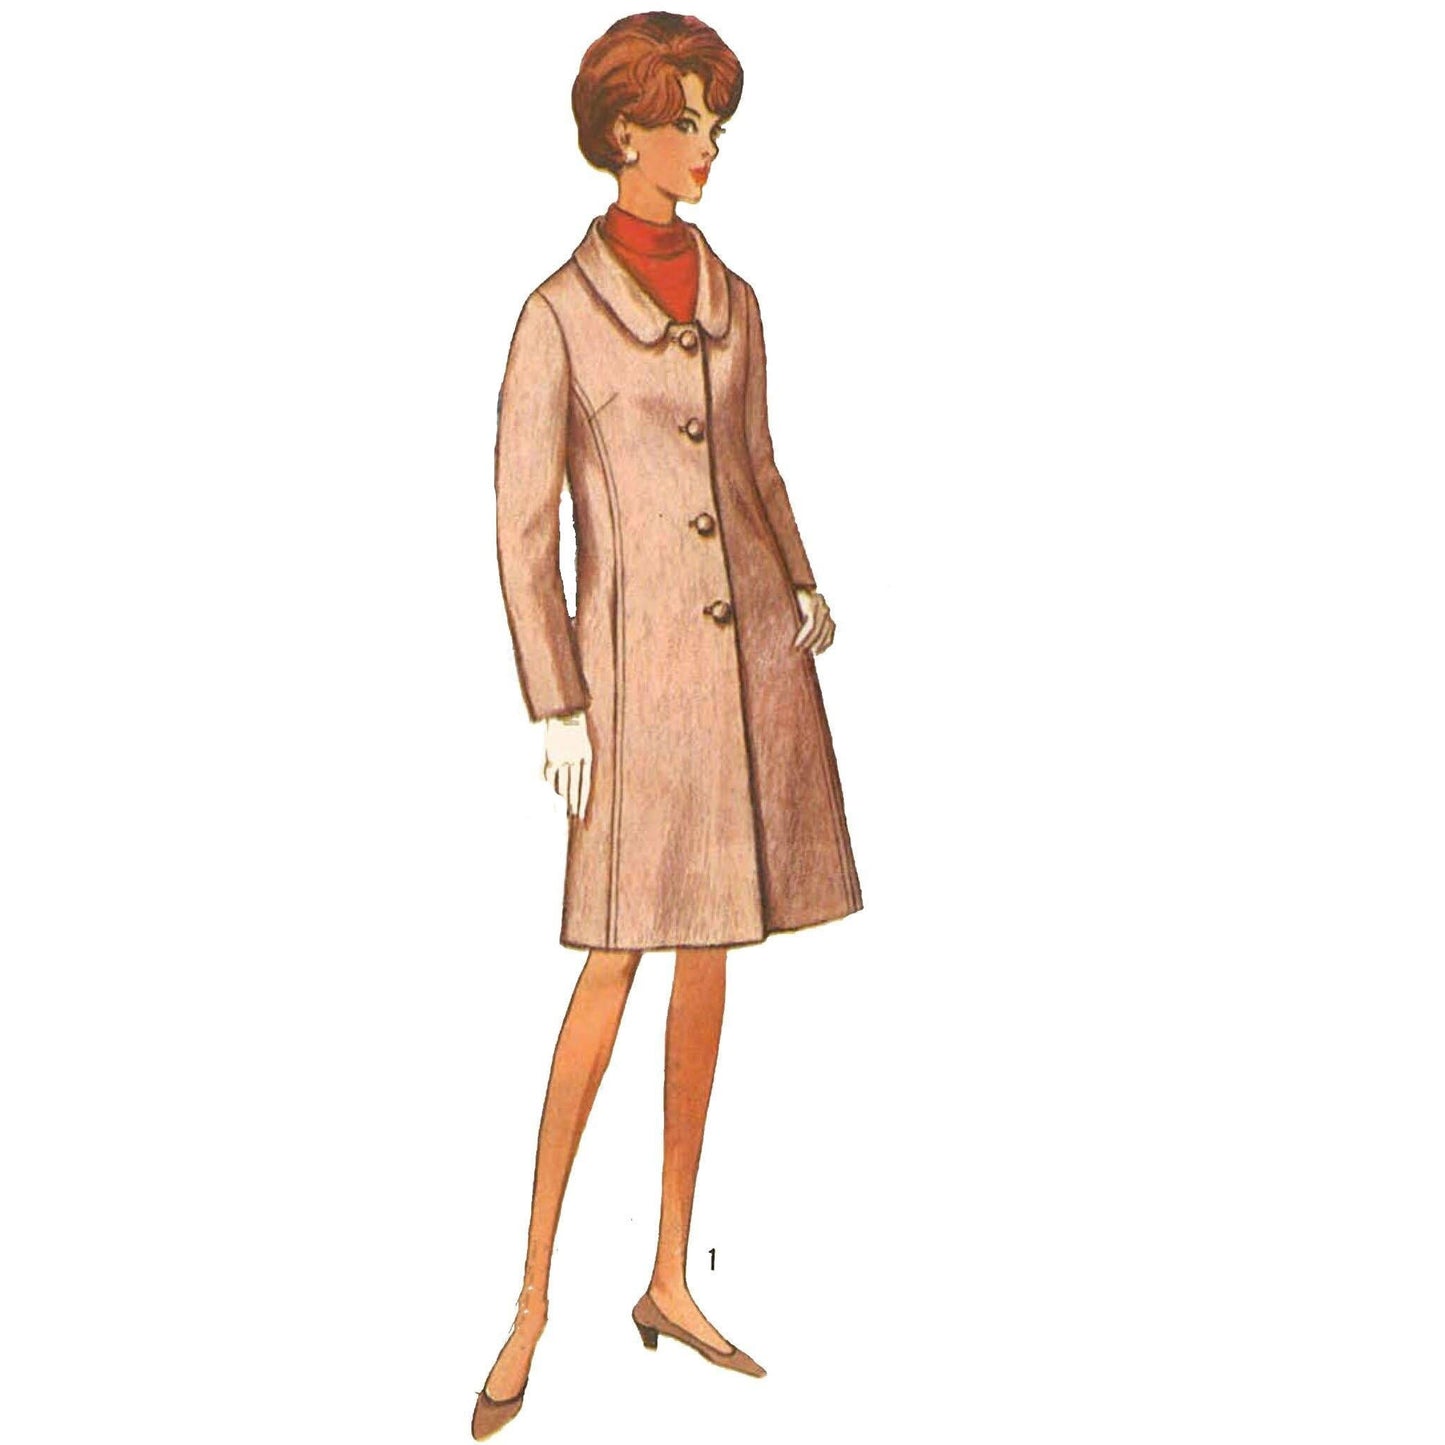 Woman wearing a coat